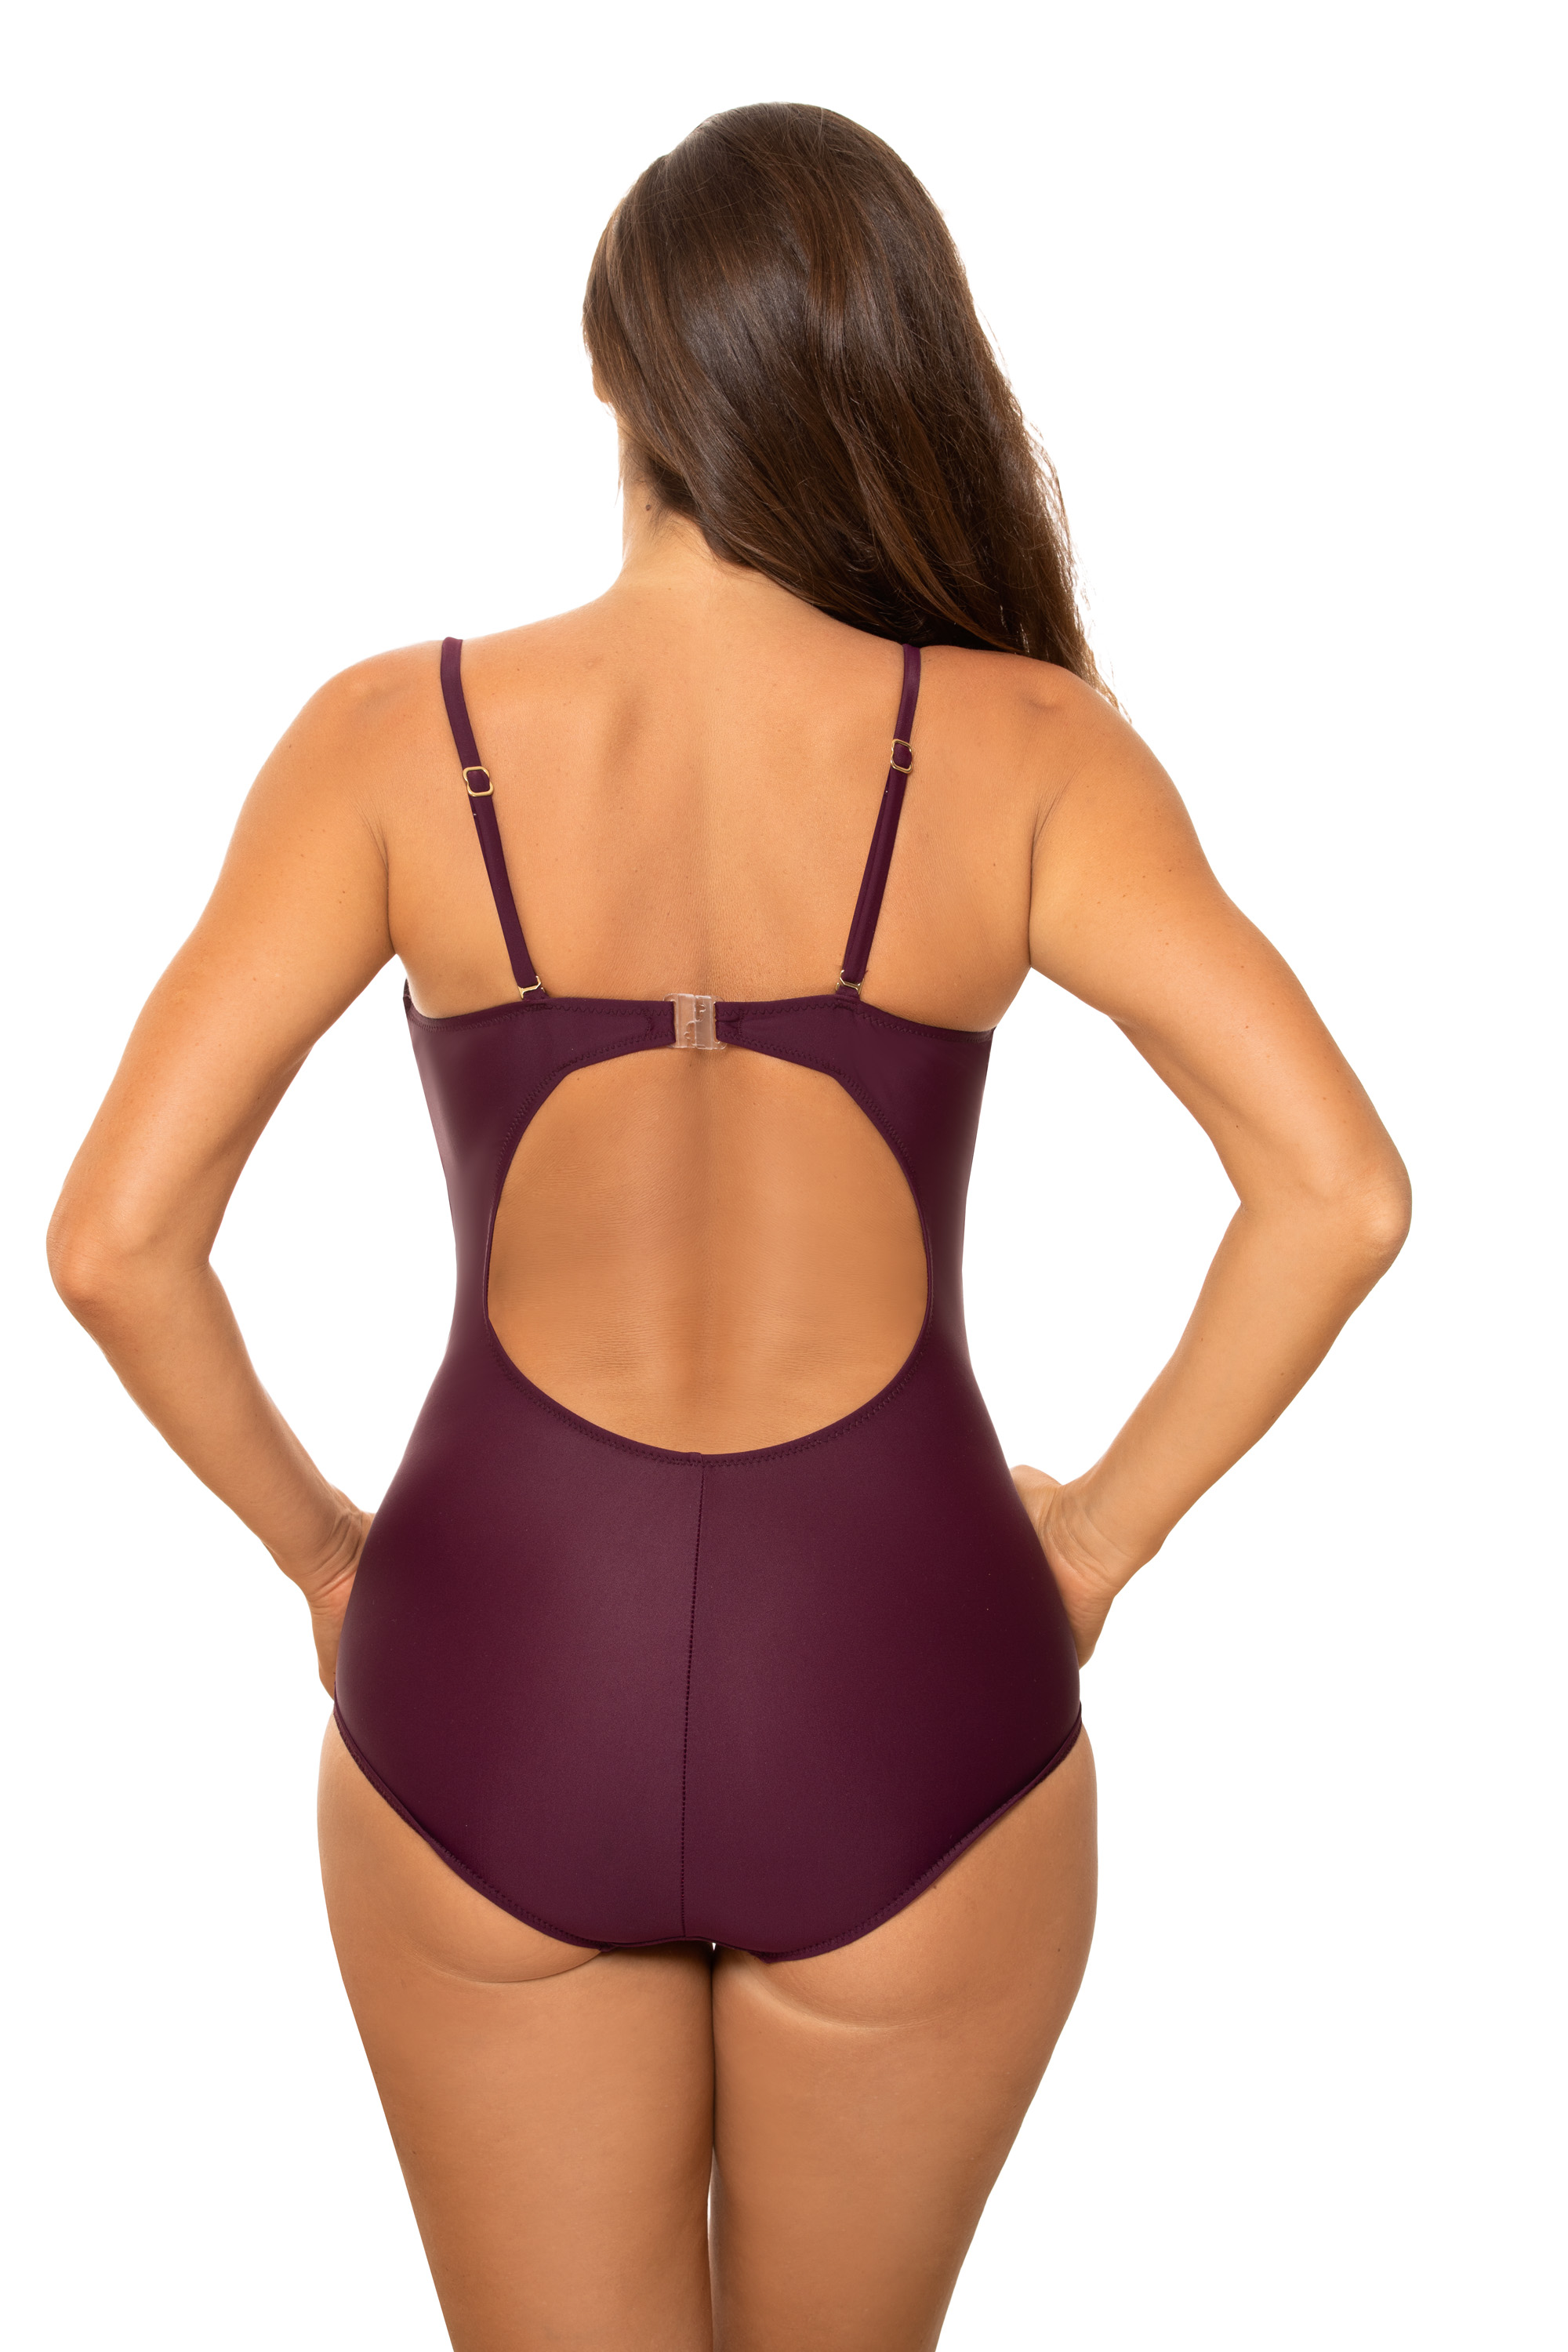 Swimsuit one piece model 164273 Marko violet Ladies